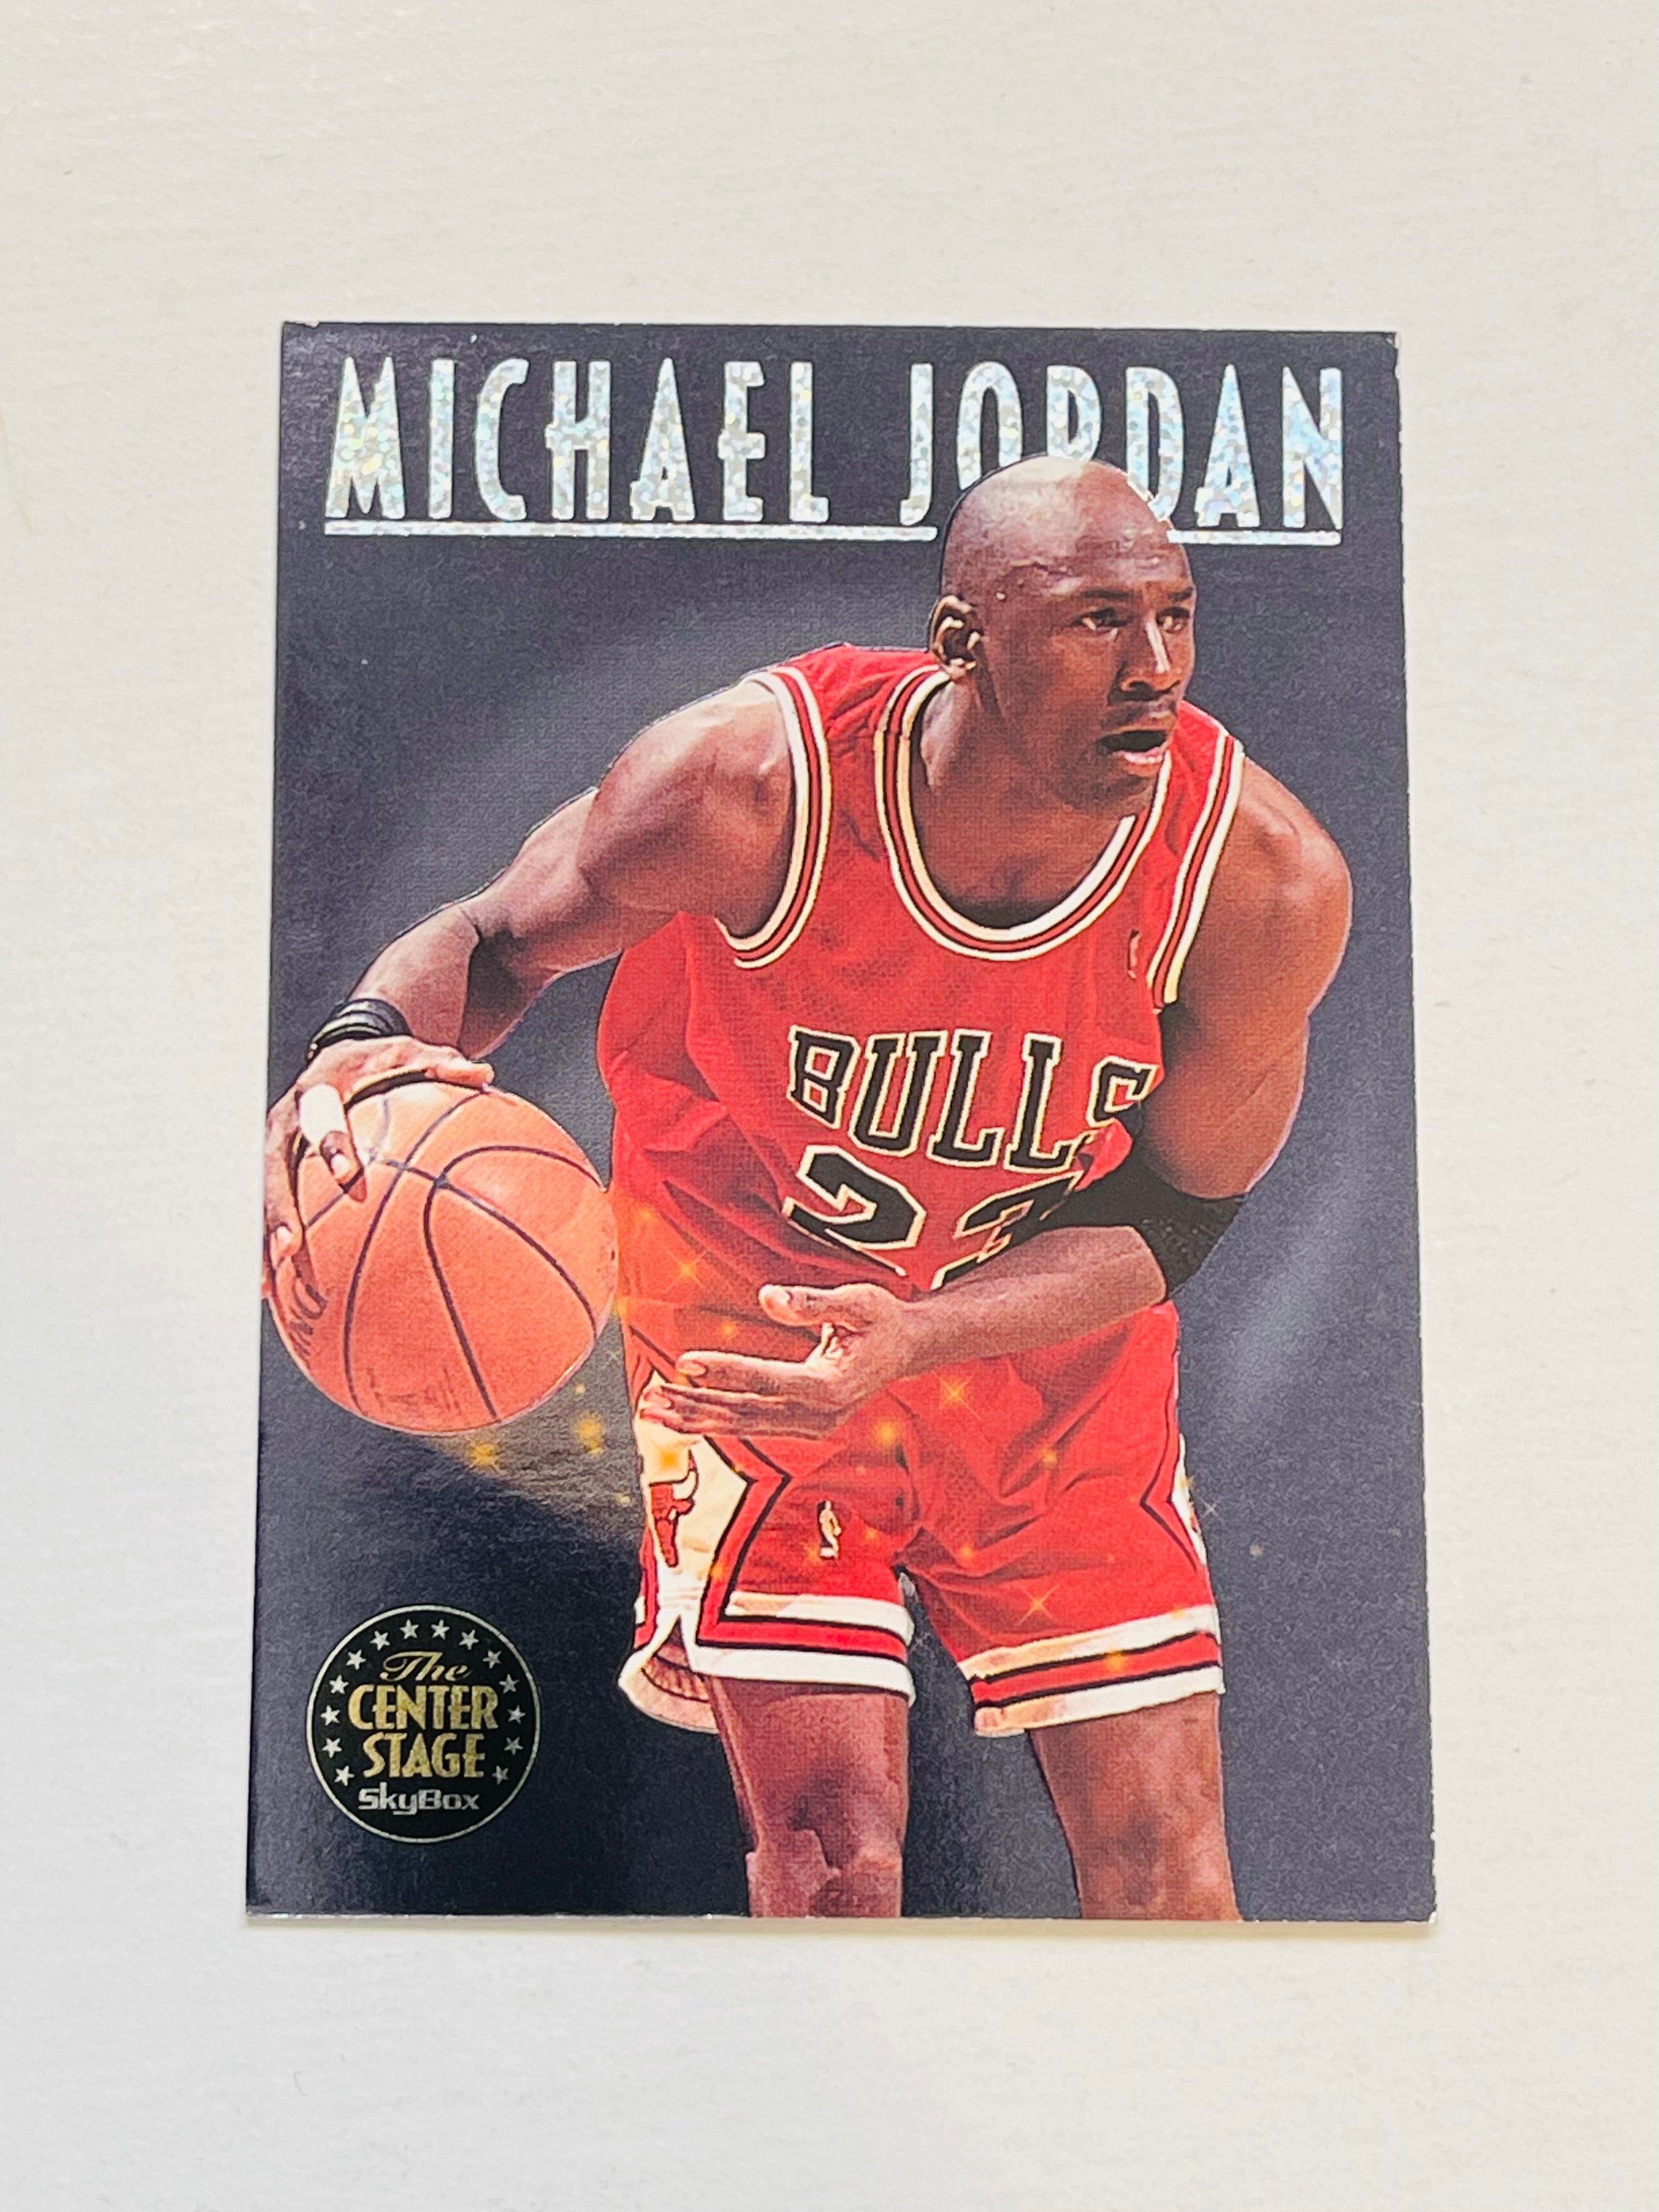 Michael Jordan skybox basketball CS1 insert card 1993